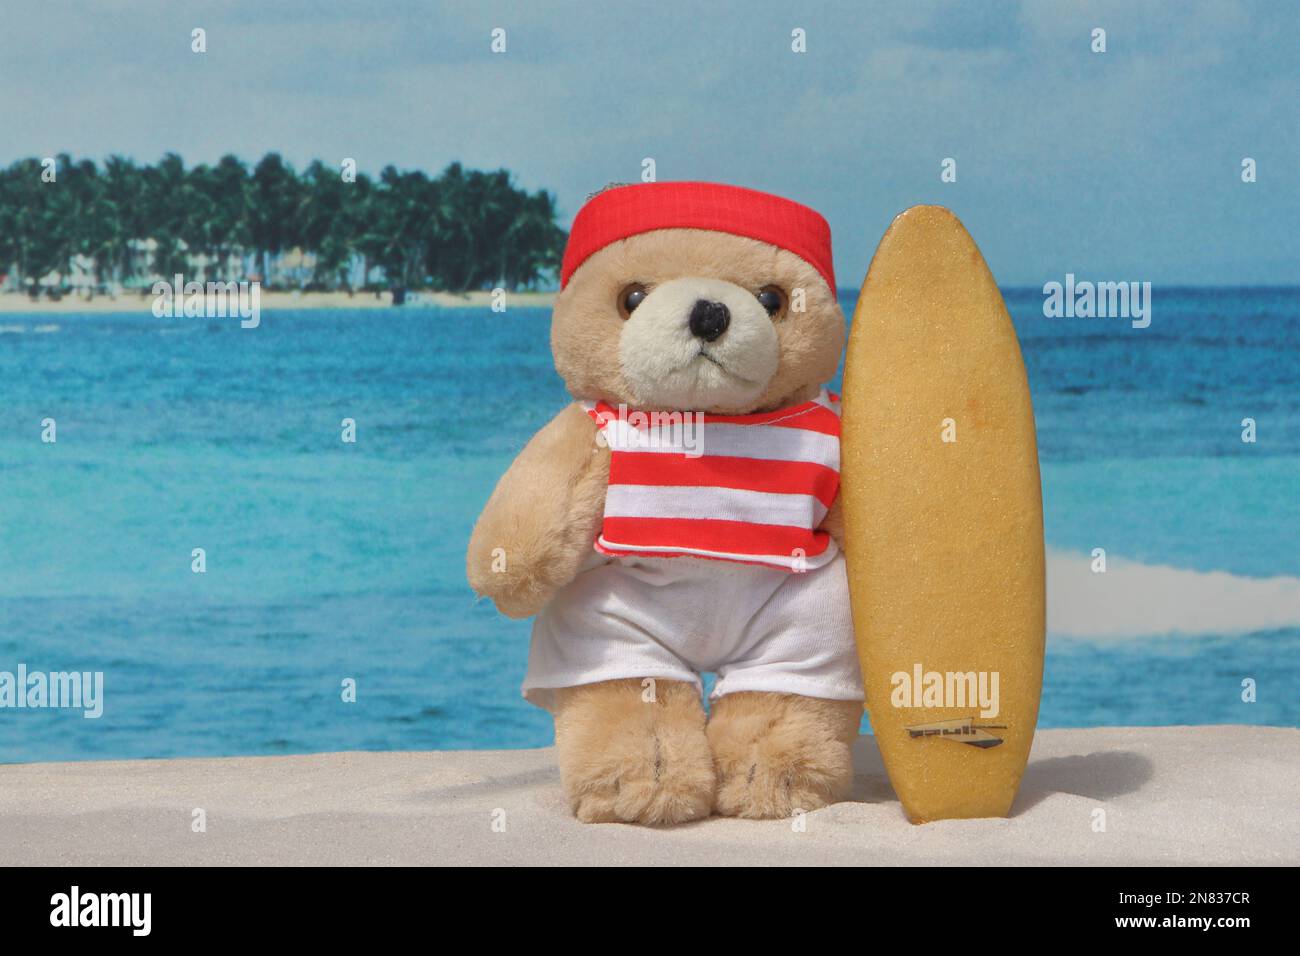 Teddy fait du surf: Surfer-Teddybär mit Surfboard am Südsee-Strand Banque D'Images